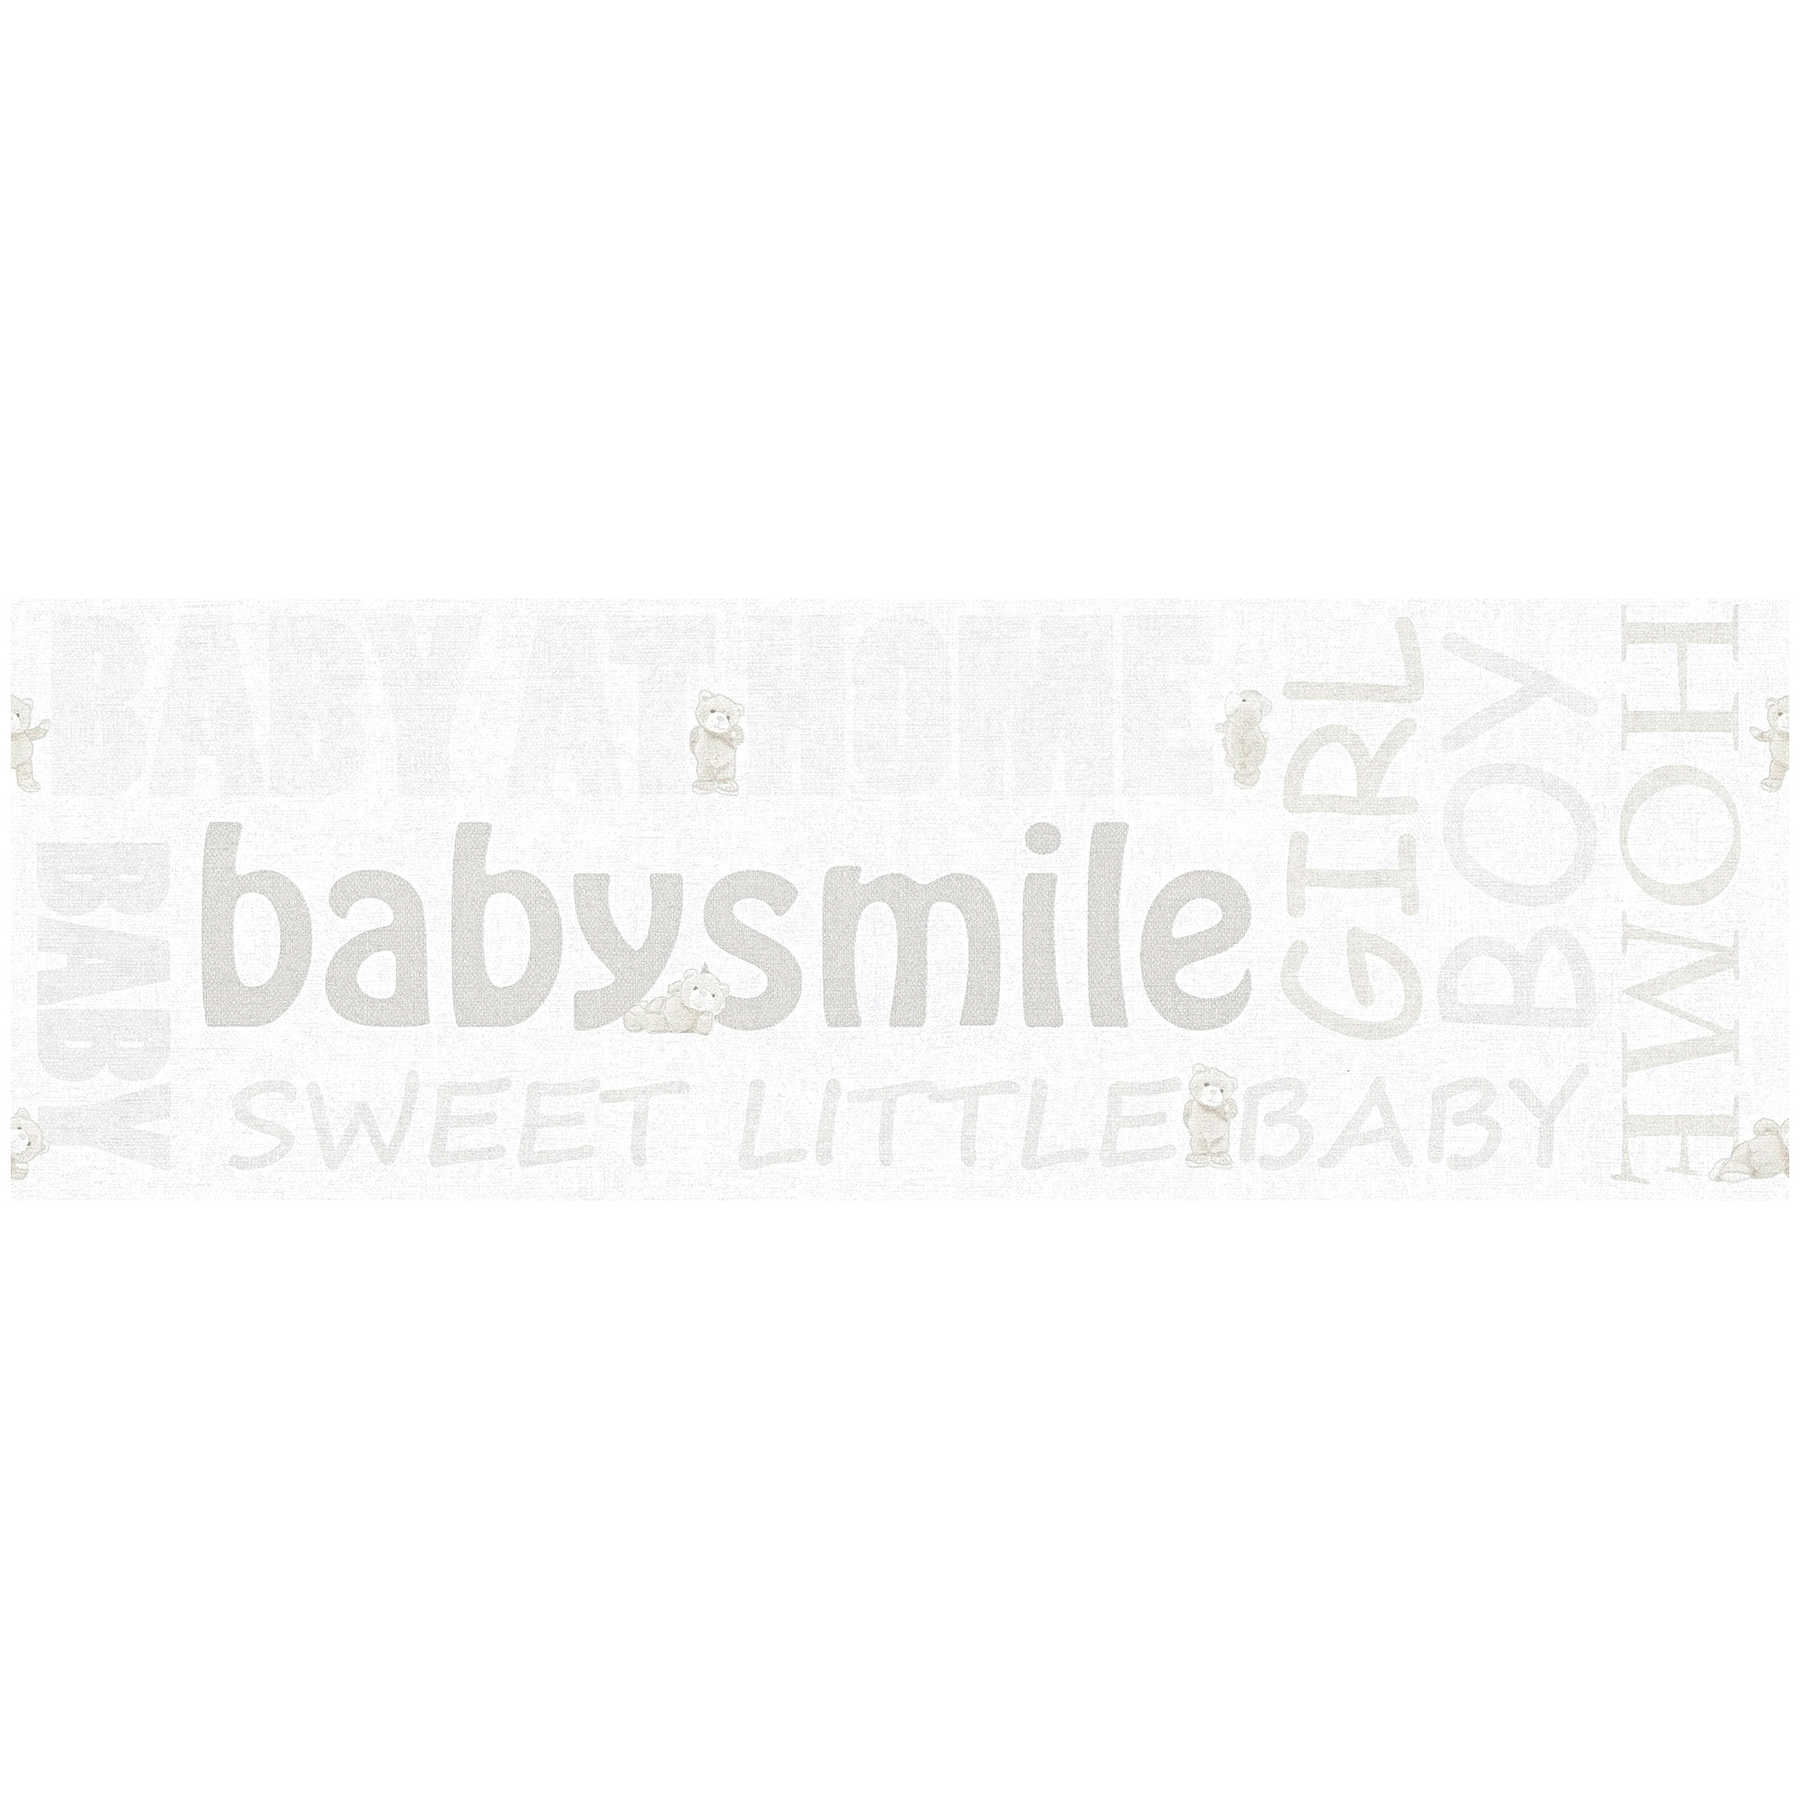 Border Baby Smile met Metallic Effect - Wit
